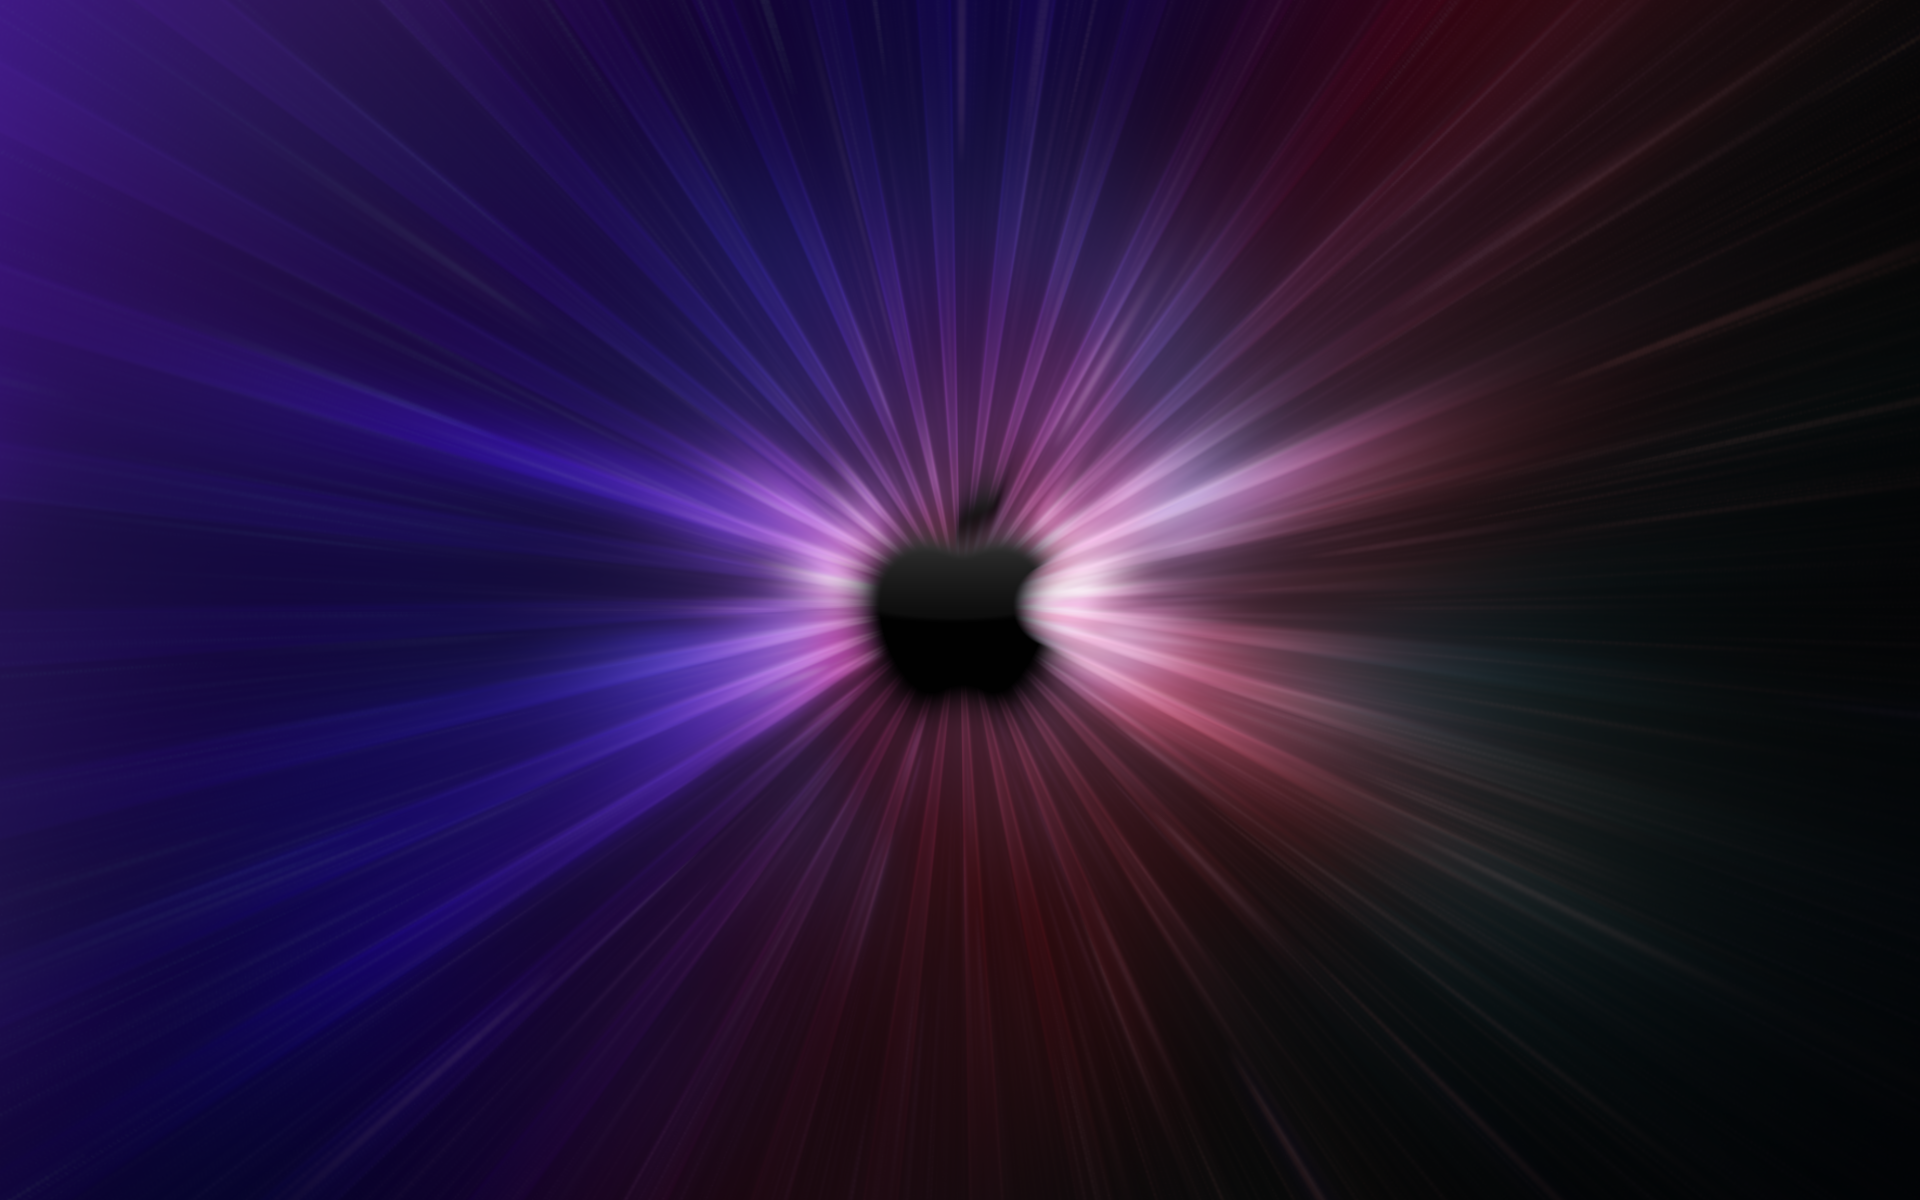 fonds d'écran cool de macbook,violet,bleu,violet,lumière,ciel